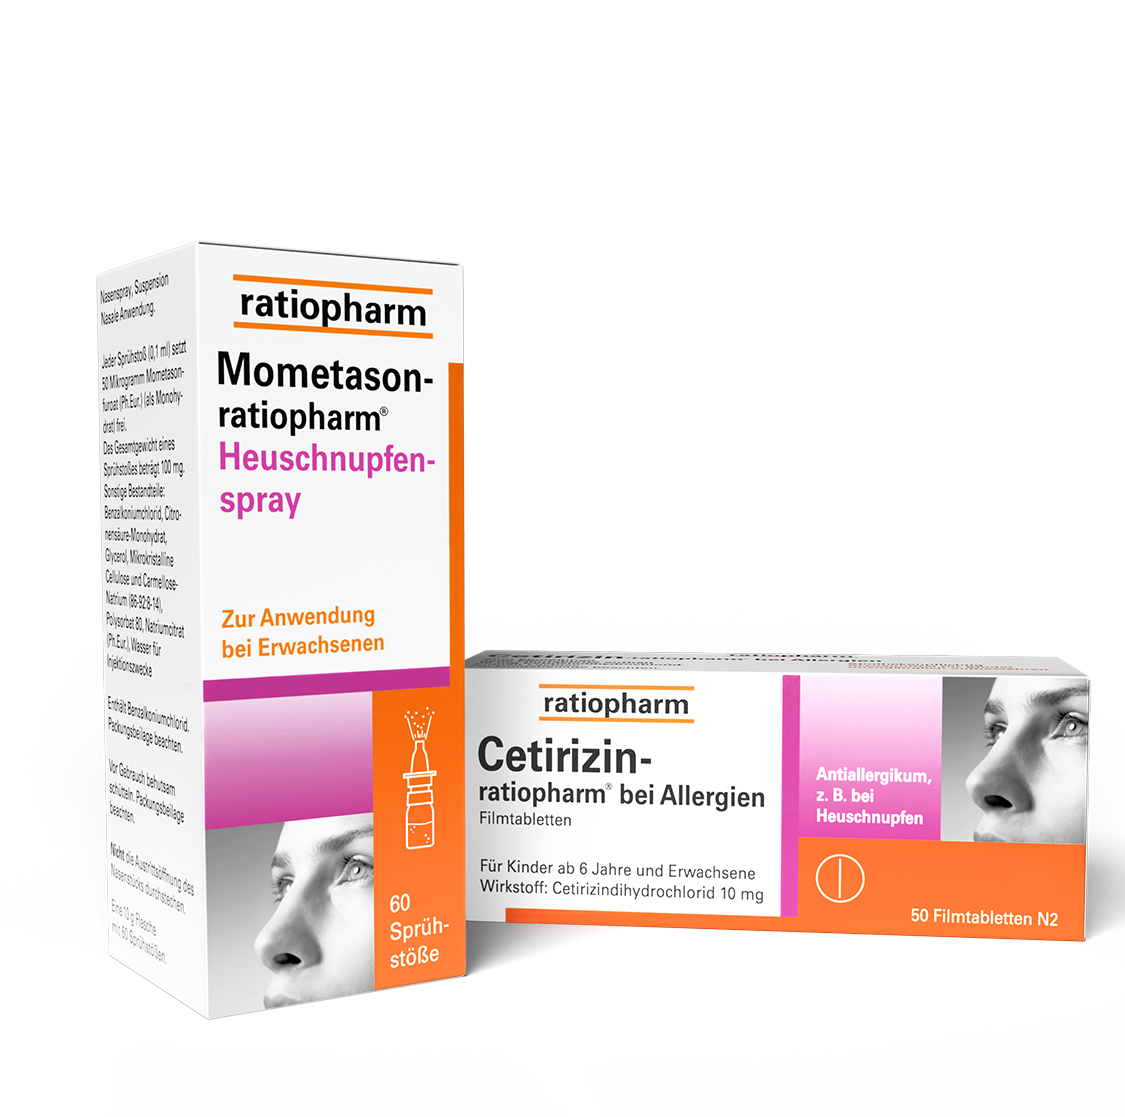 'pyrus – ratiopharm - Packaging - Mometason und Cetirizin